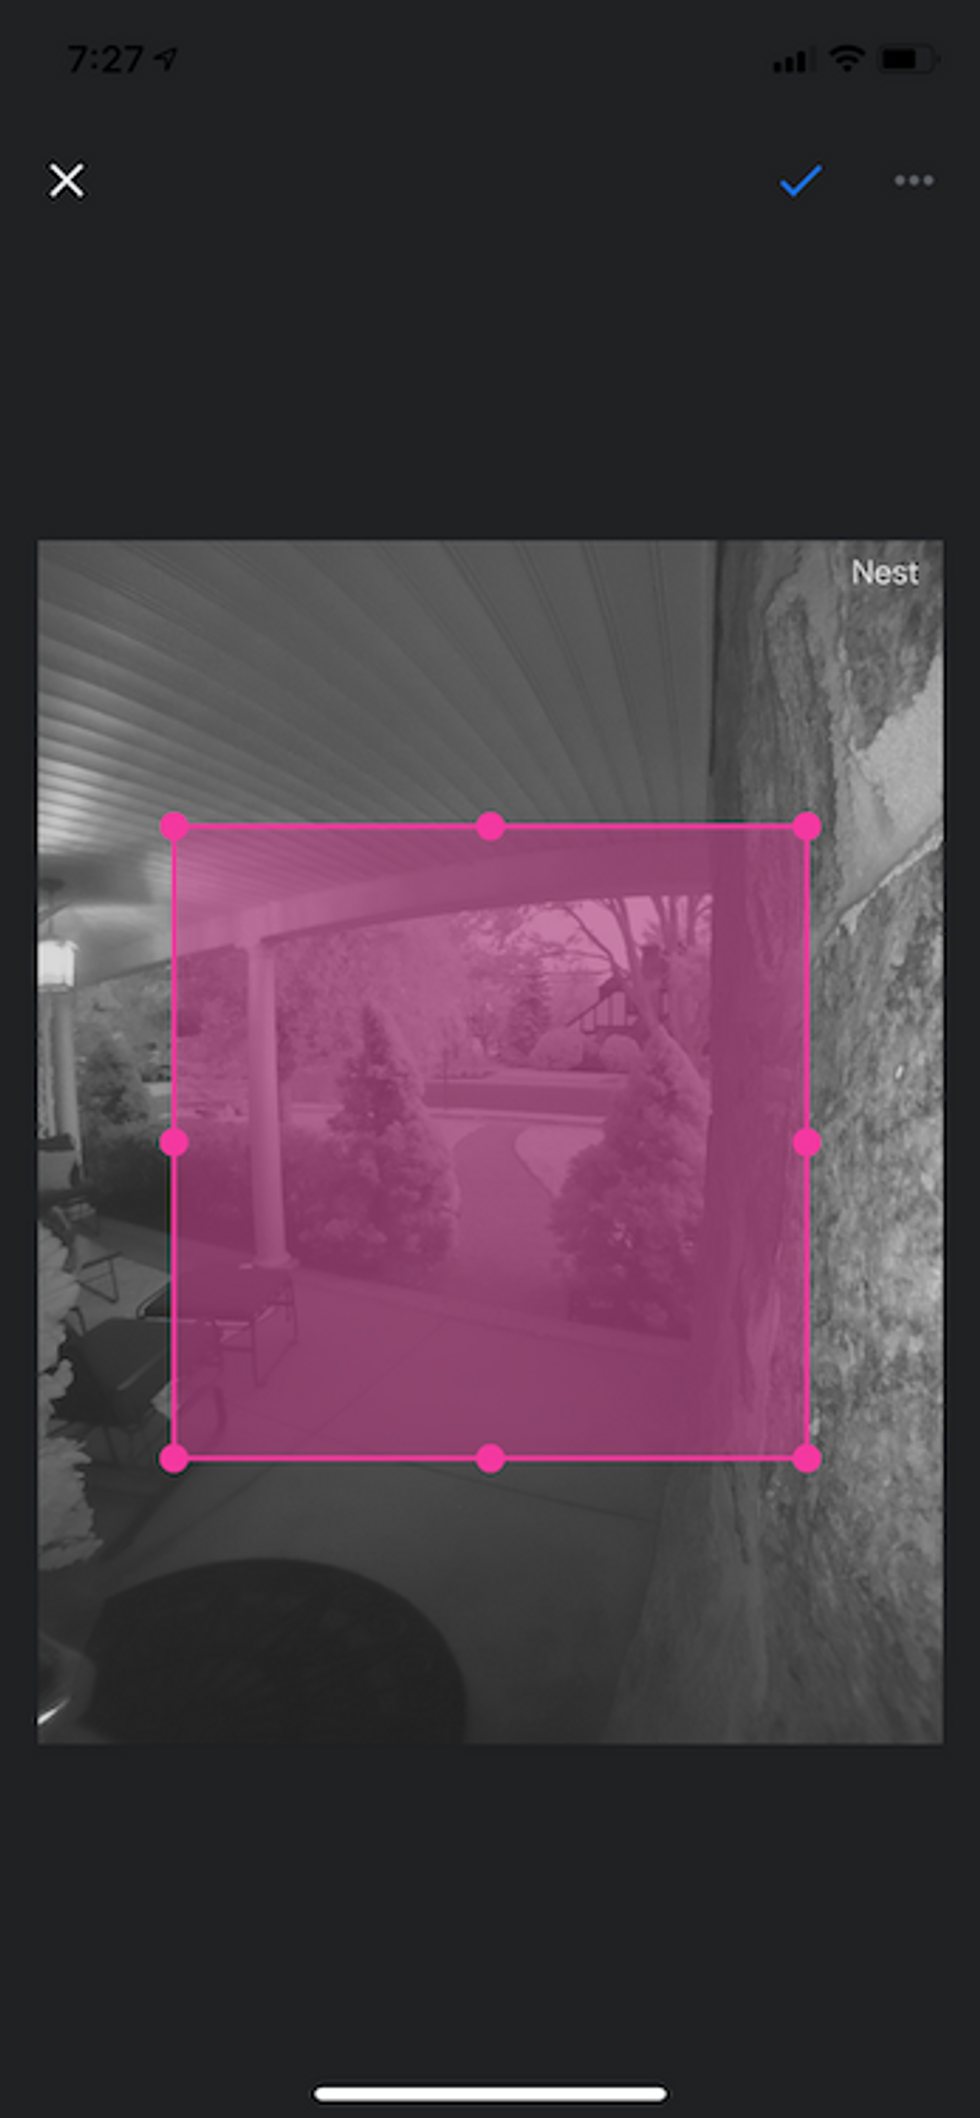 Setting up motion detection in Google Home app for Nest Doorbell